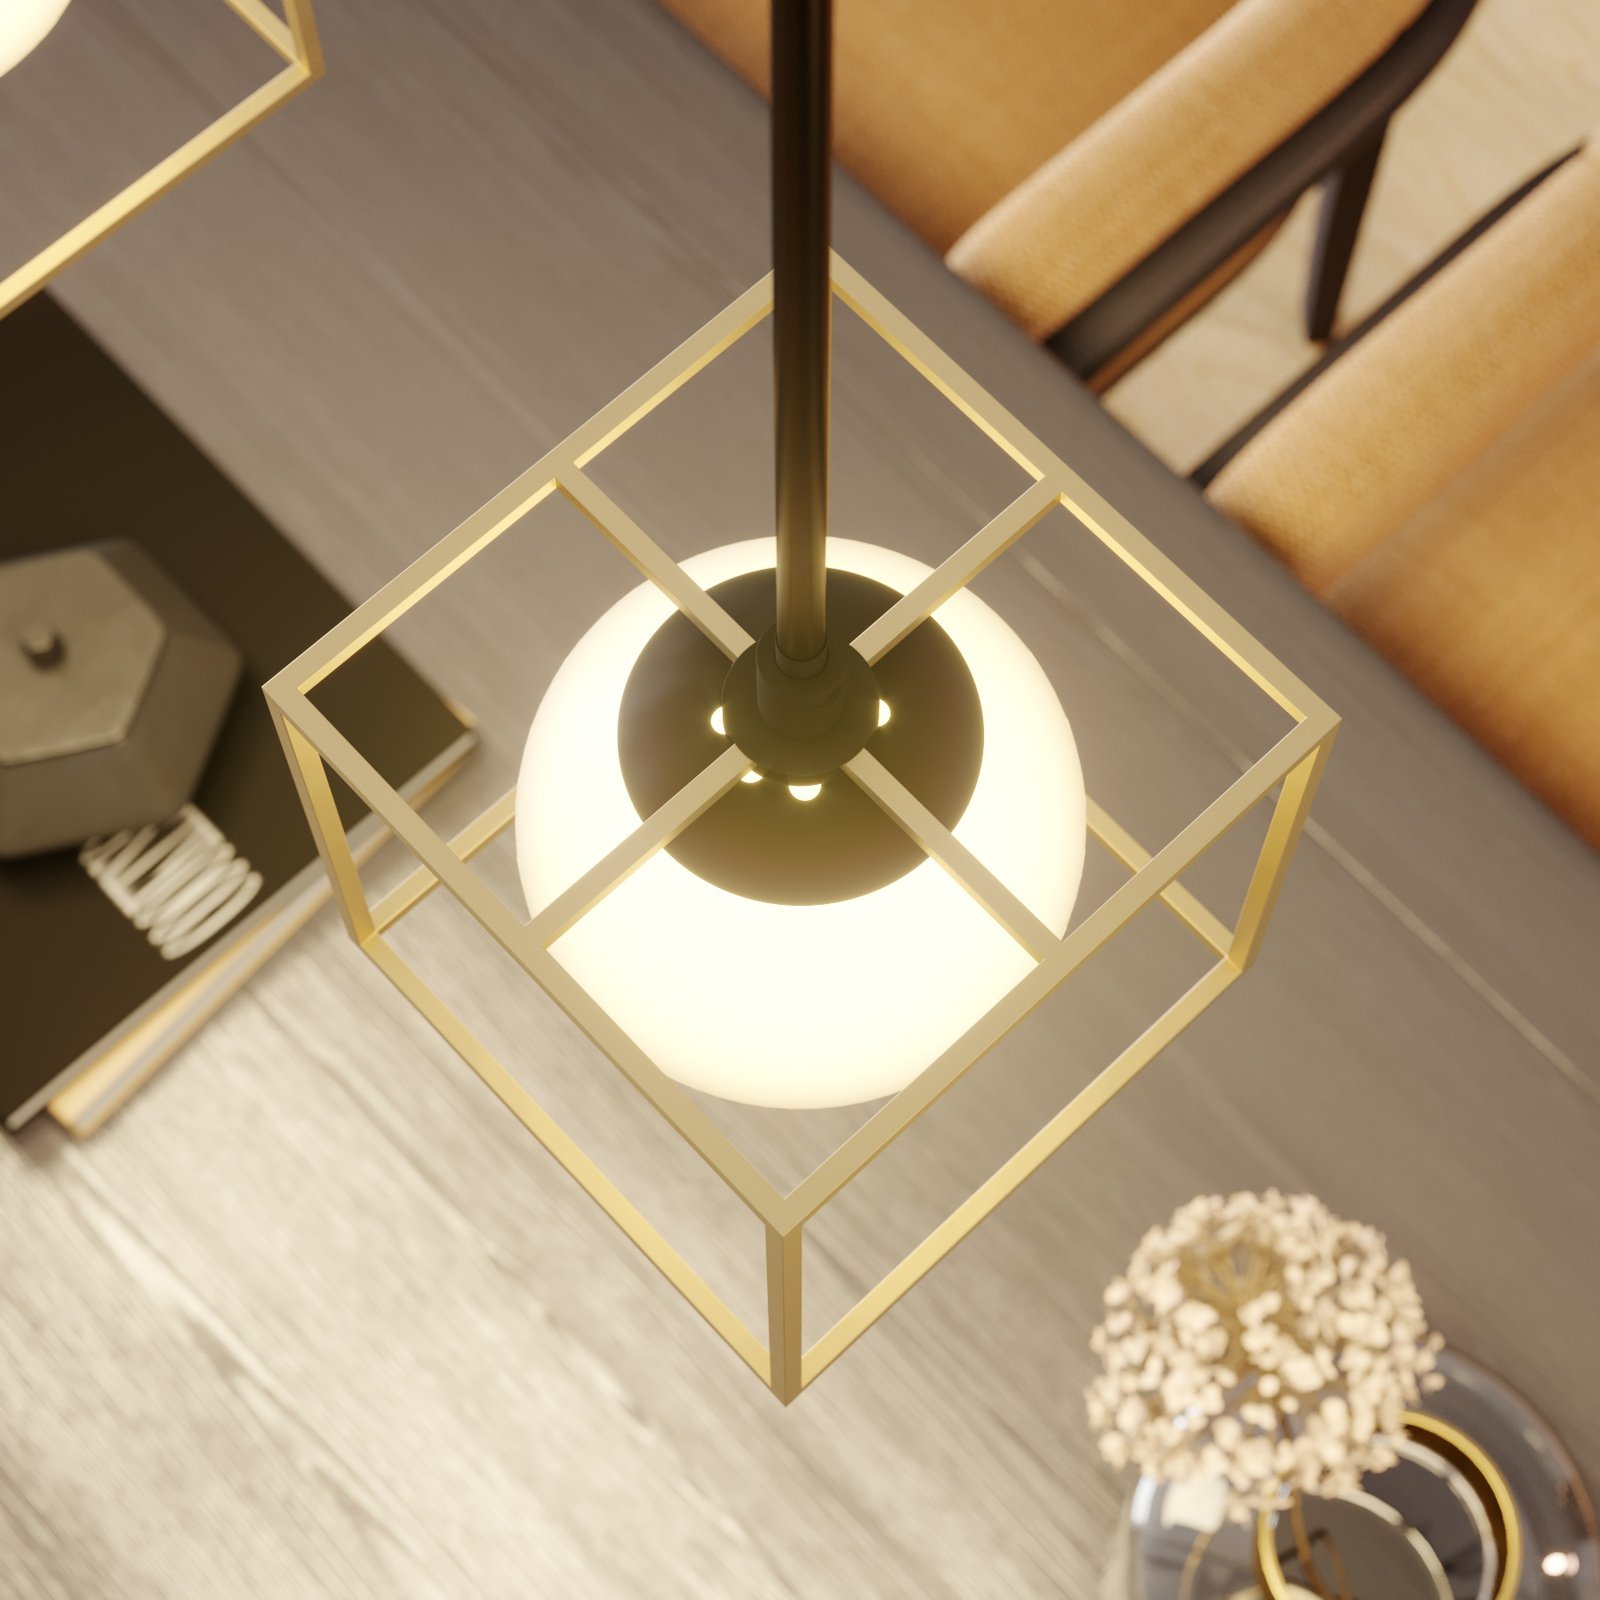 Hanglamp Aloam met kooi en glasbollen, 4 lampjes